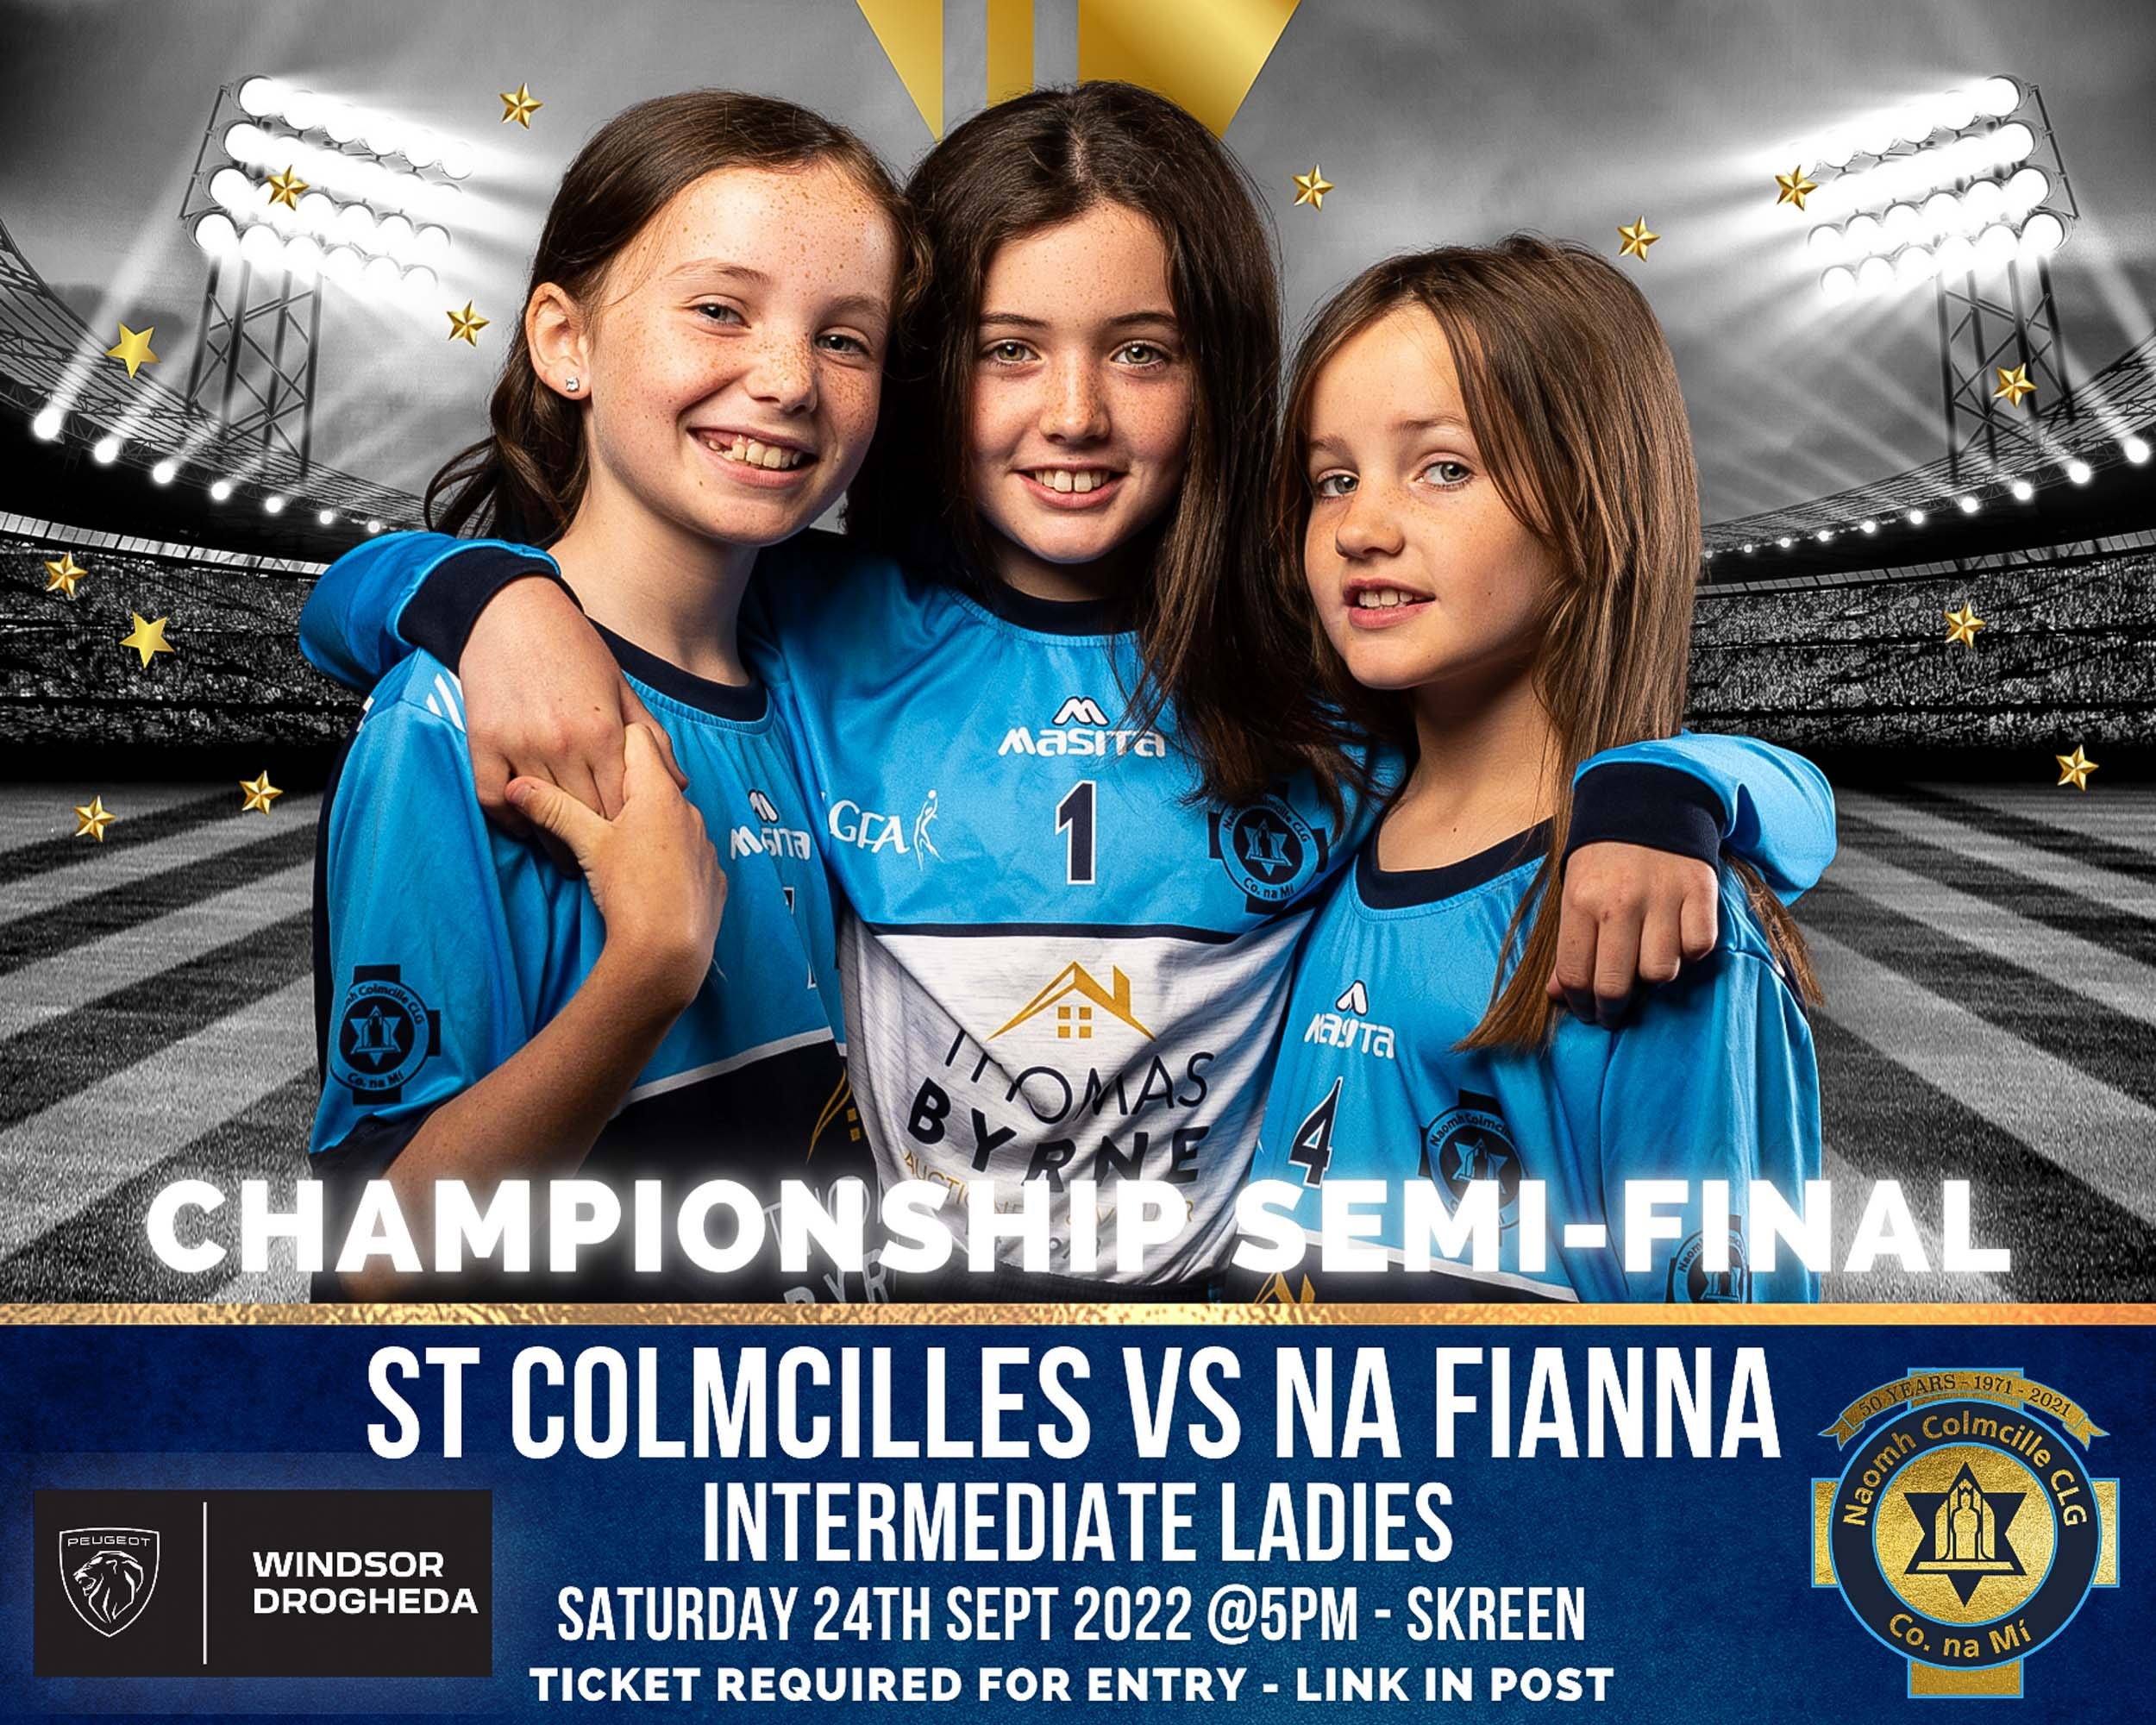 GAA Poster - GAA Photos - Meath GAA - St Colmcilles - Sports Poster Ireland-4.jpg